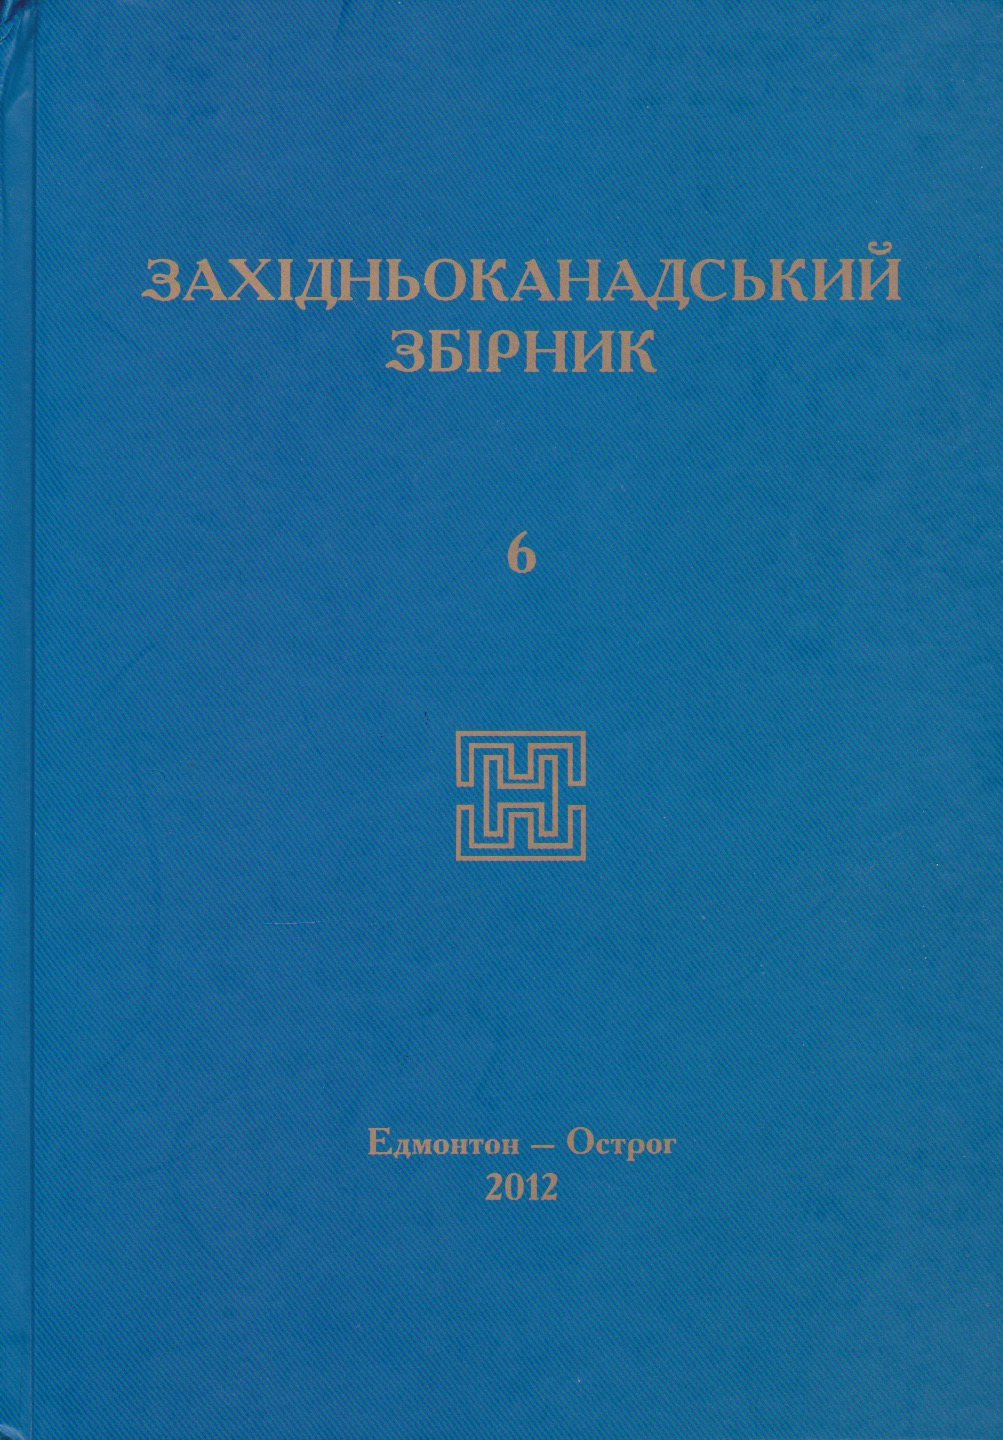 zbirnyk-6-cover